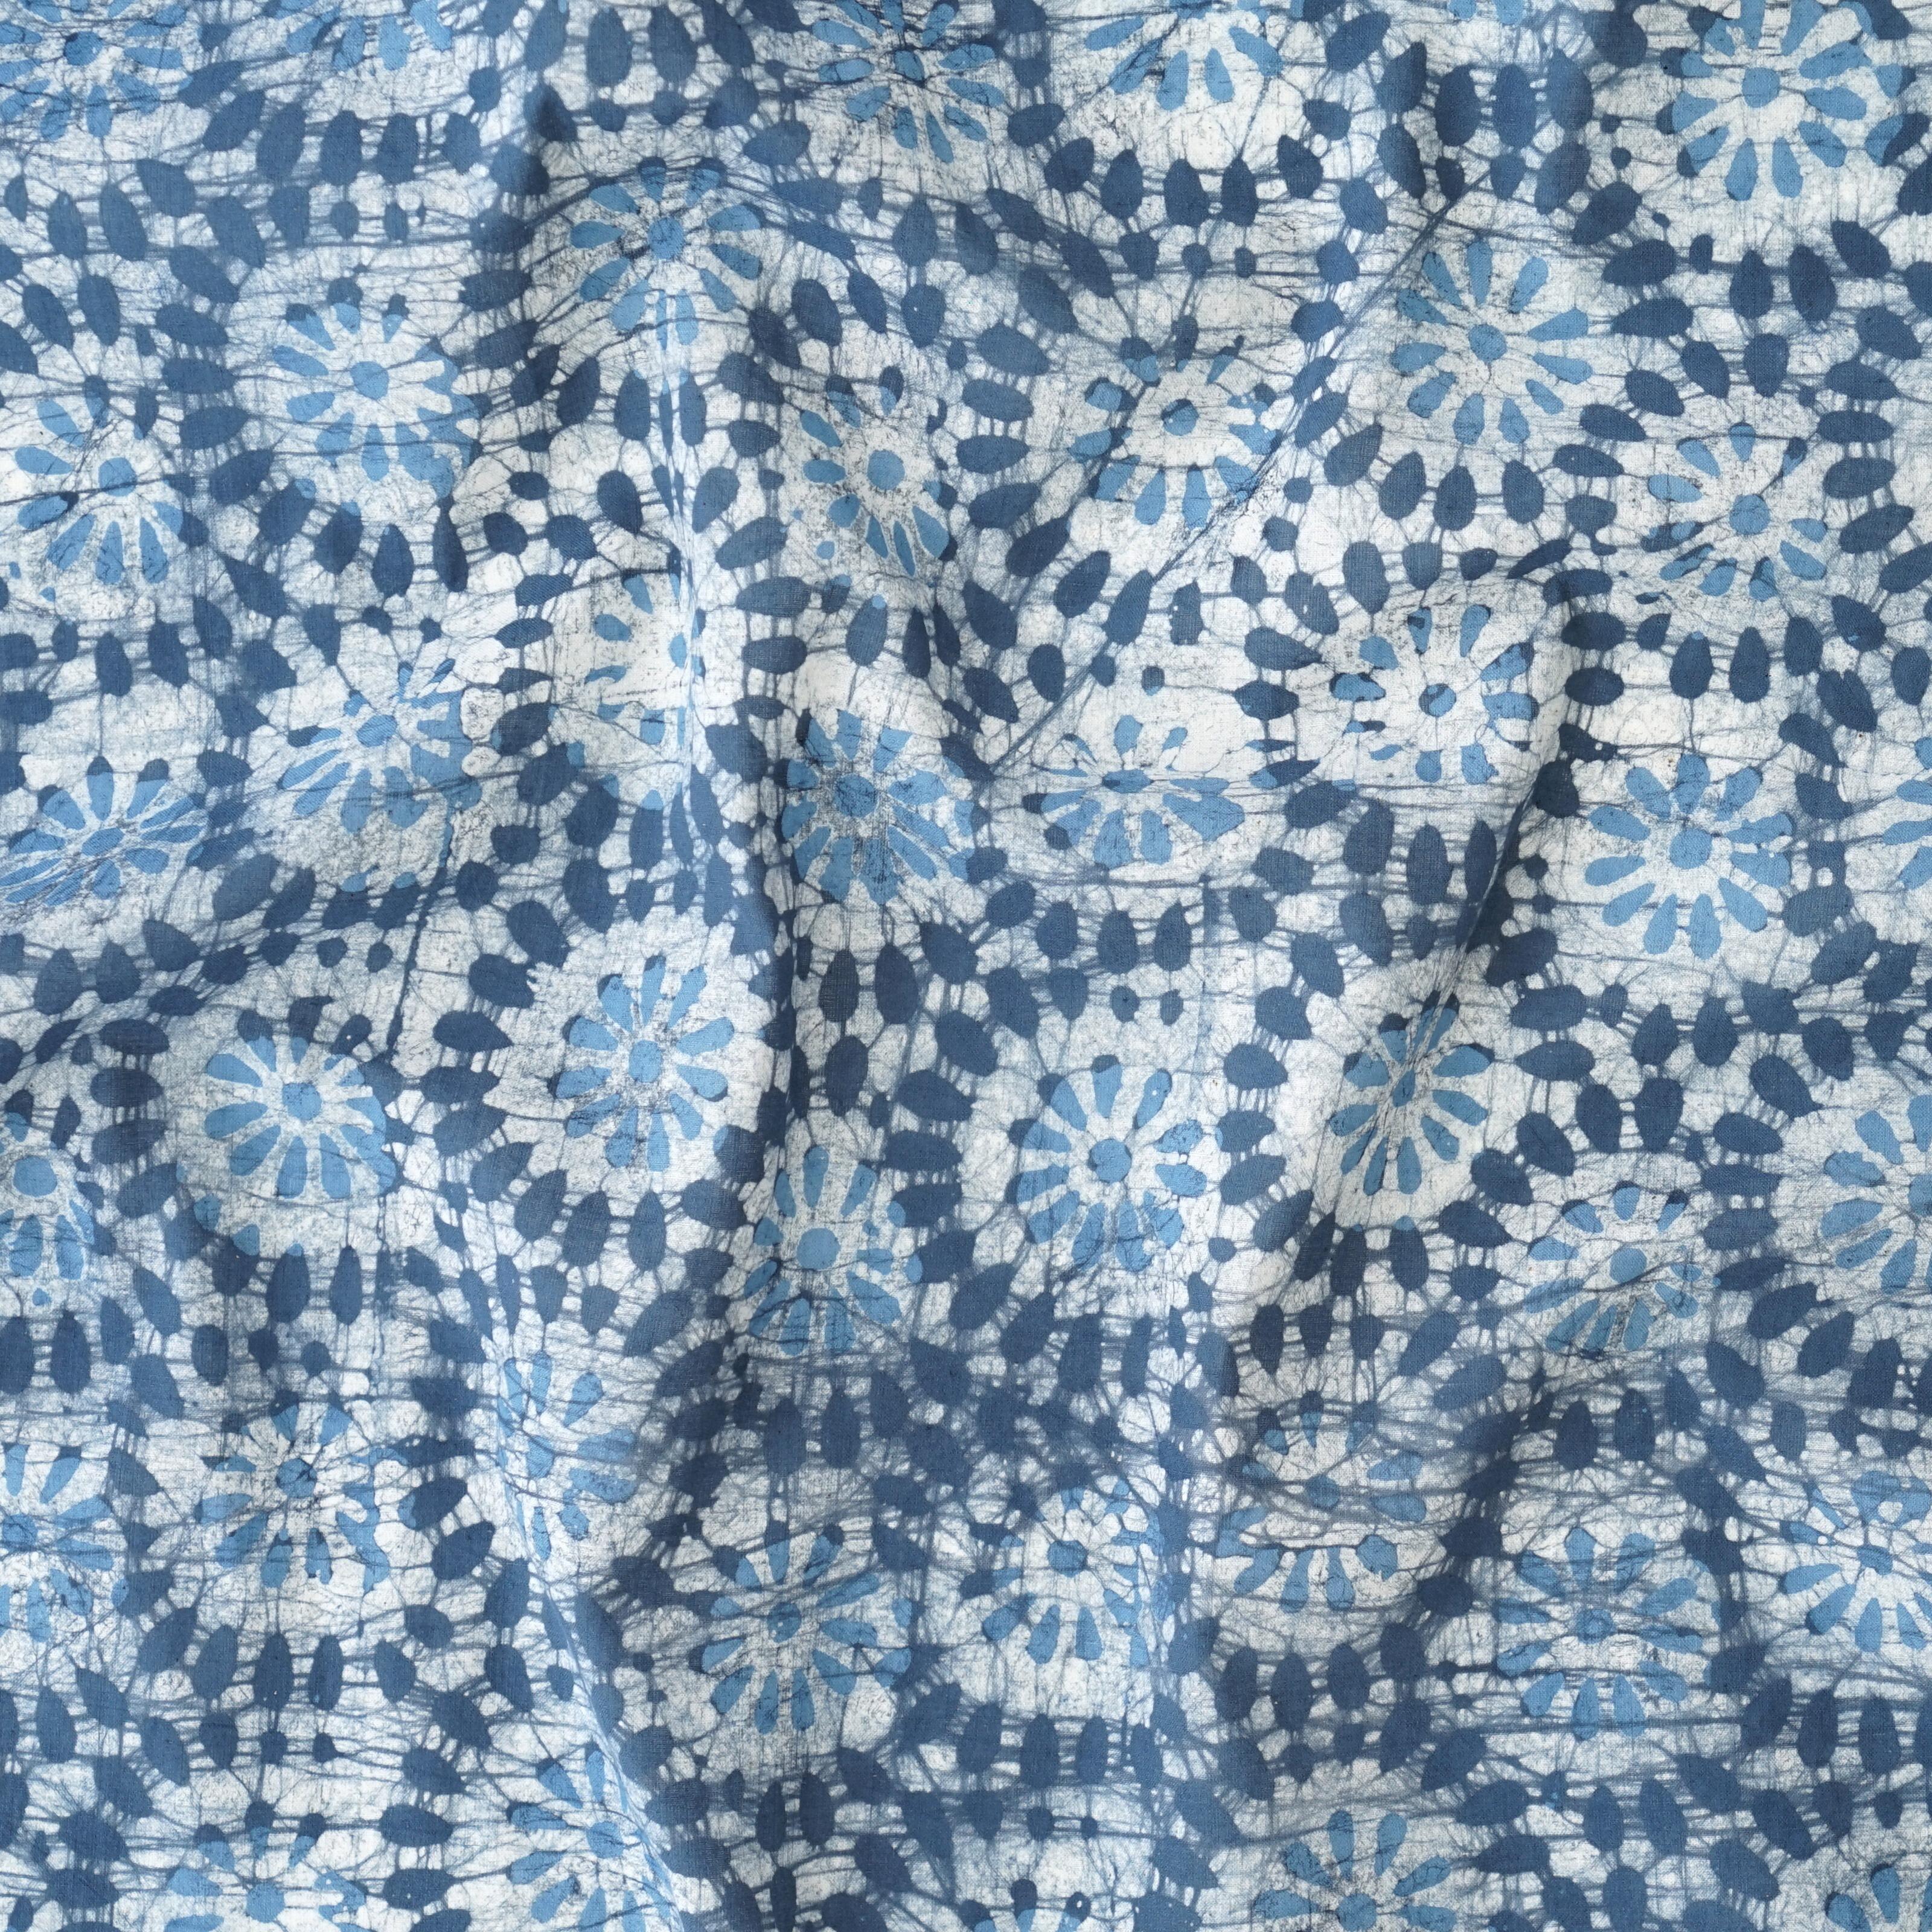 Block-Printed Batik Fabric - Cotton Cloth - Sky Dance Design - Contrast